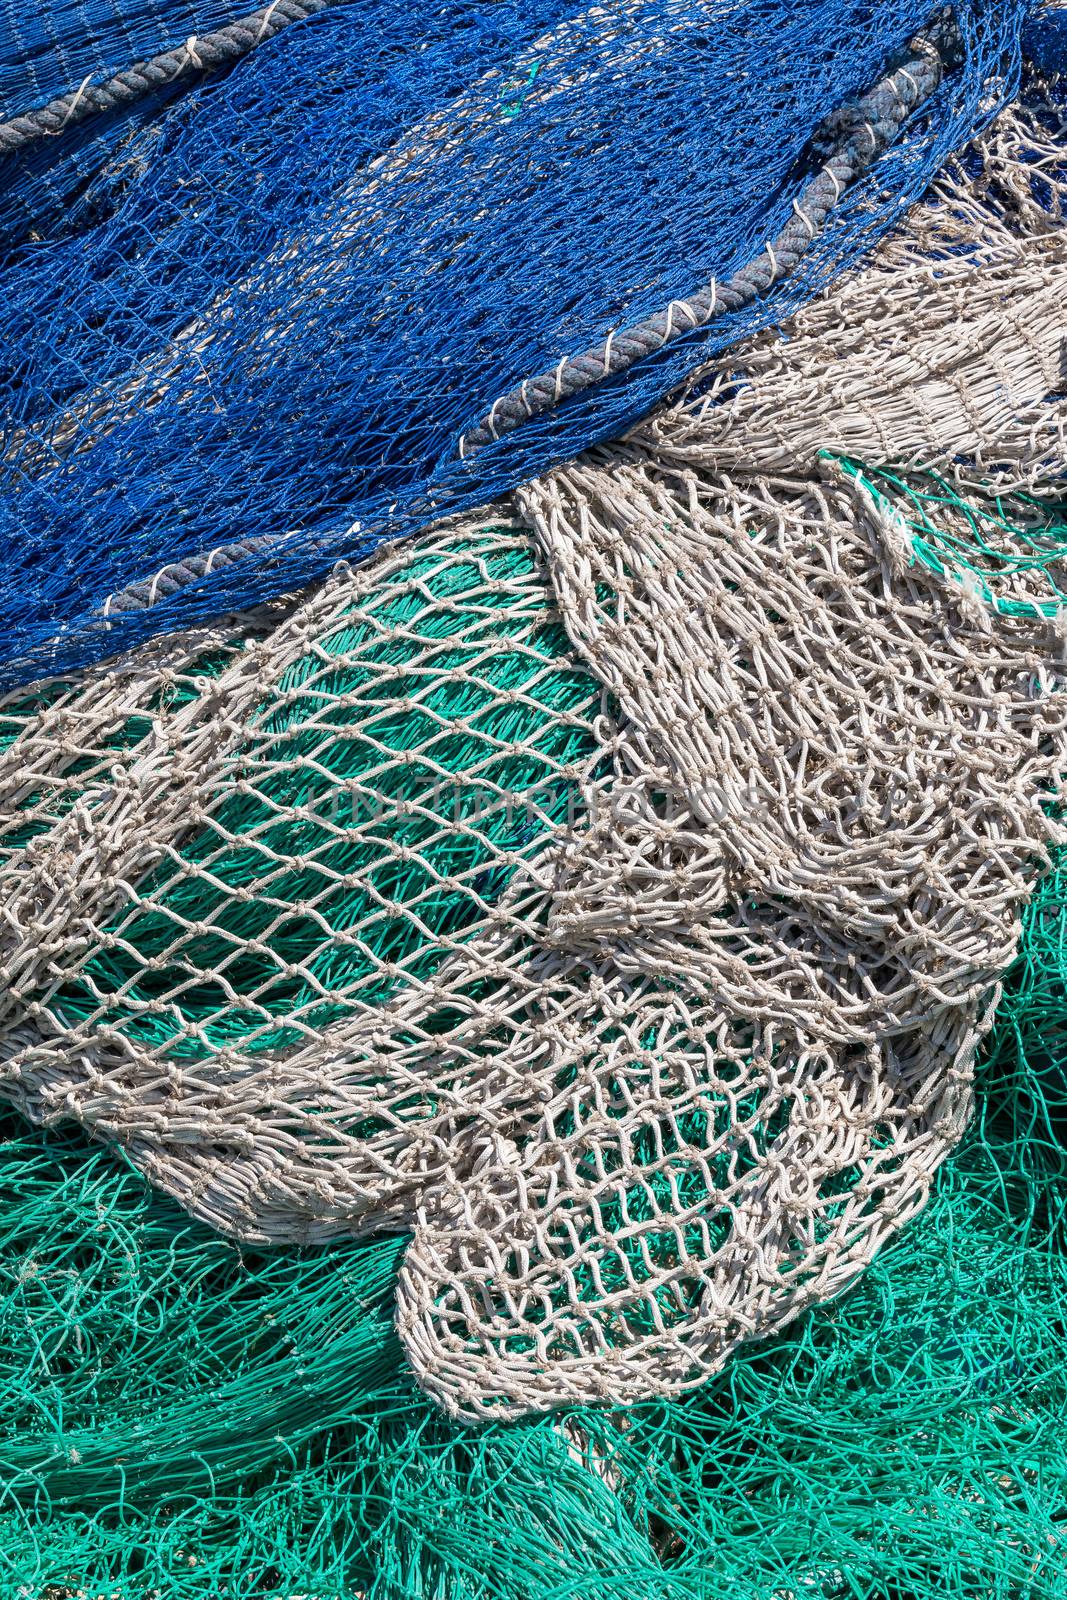 Fishing nets by Digoarpi